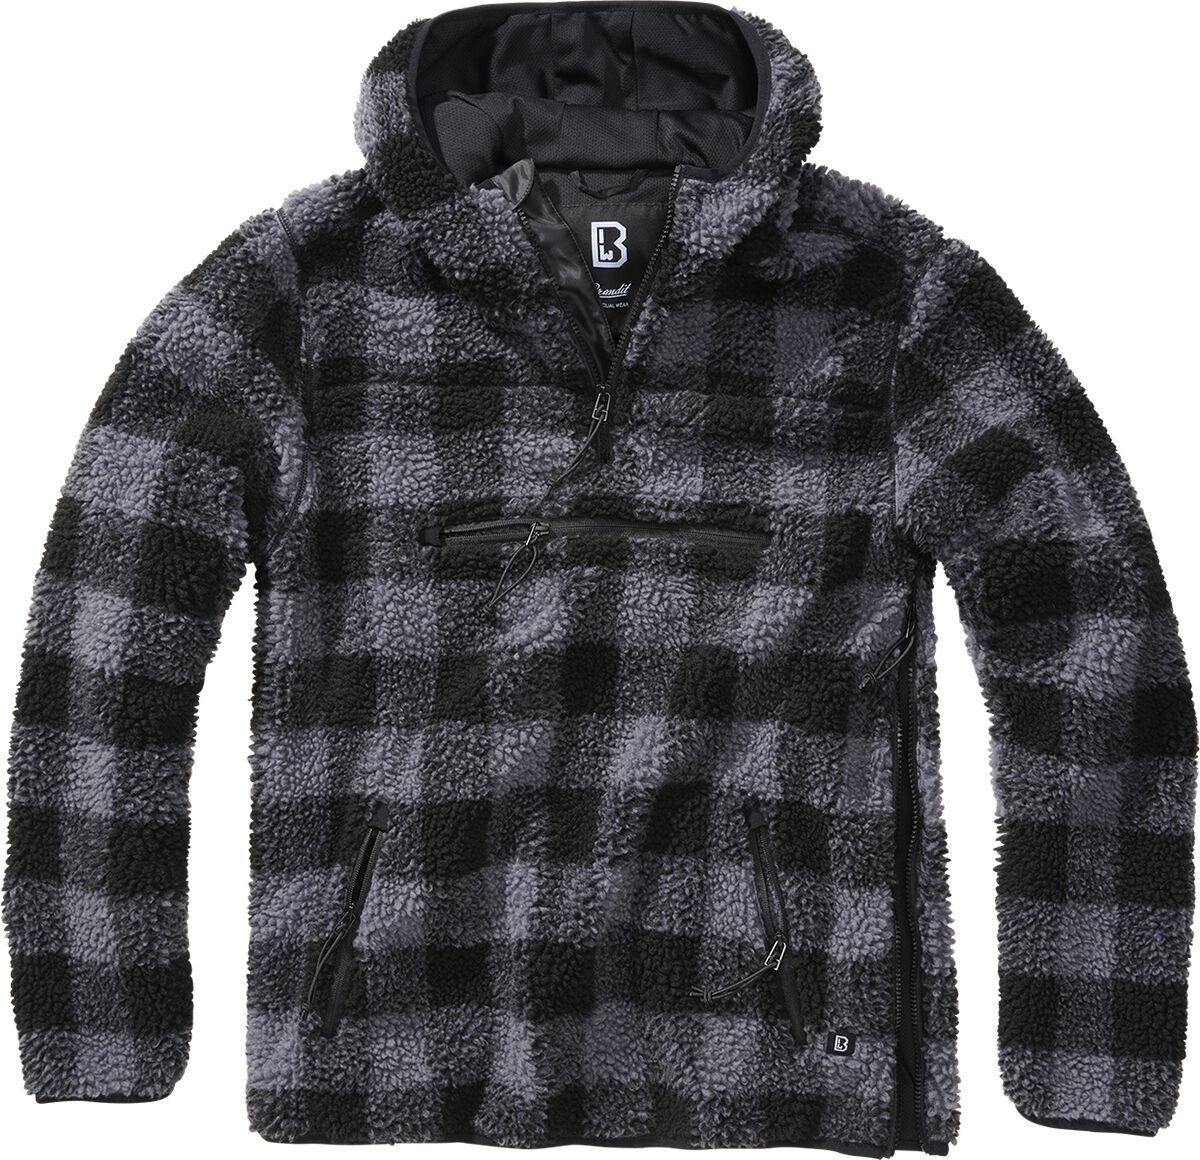 Image of Felpa con cappuccio di Brandit - Fleece Worker Pullover - S a XL - Uomo - nero/grigio